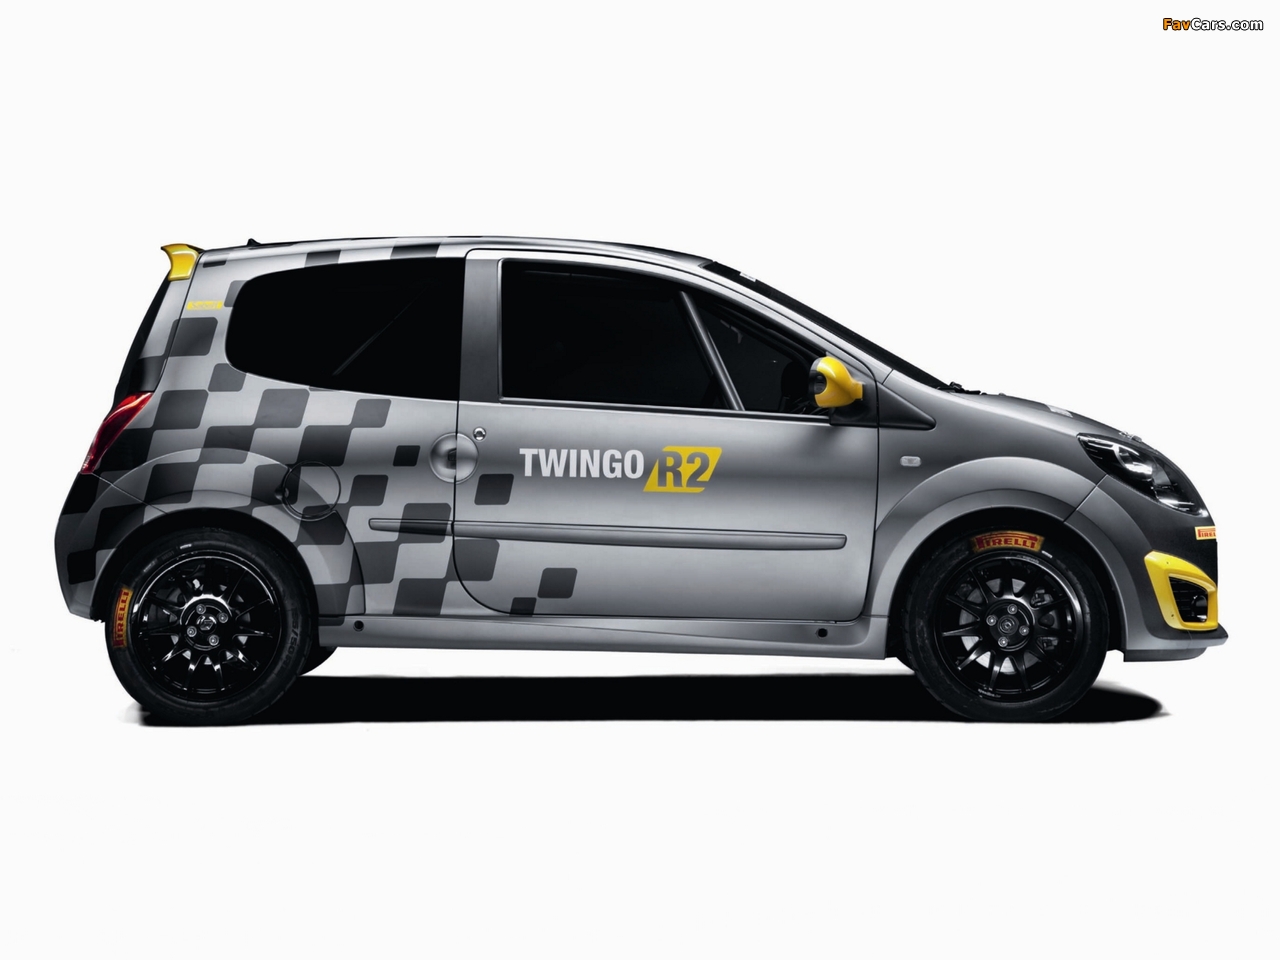 Renault Twingo R2 2011 photos (1280 x 960)